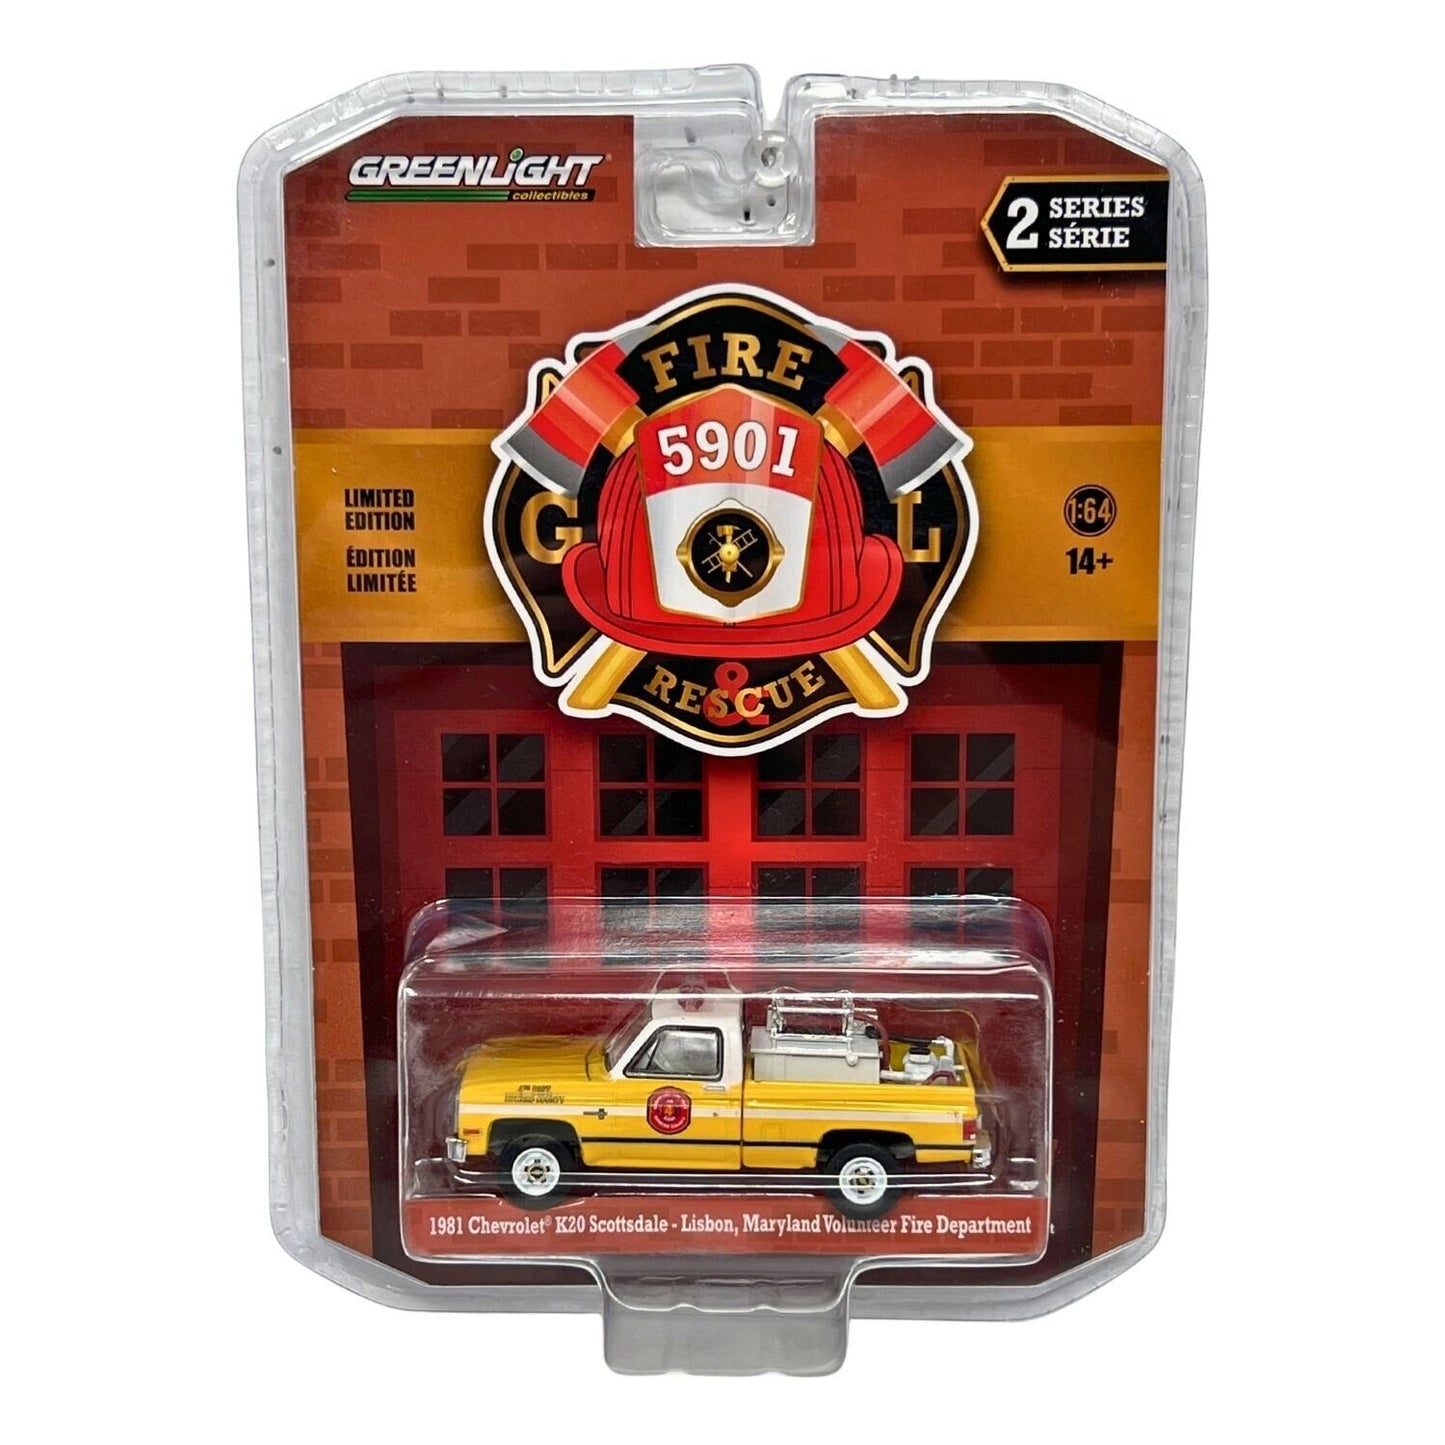 Greenlight Fire & Rescue 1981 Chevrolet K20 Scottsdale 1:64 Diecast